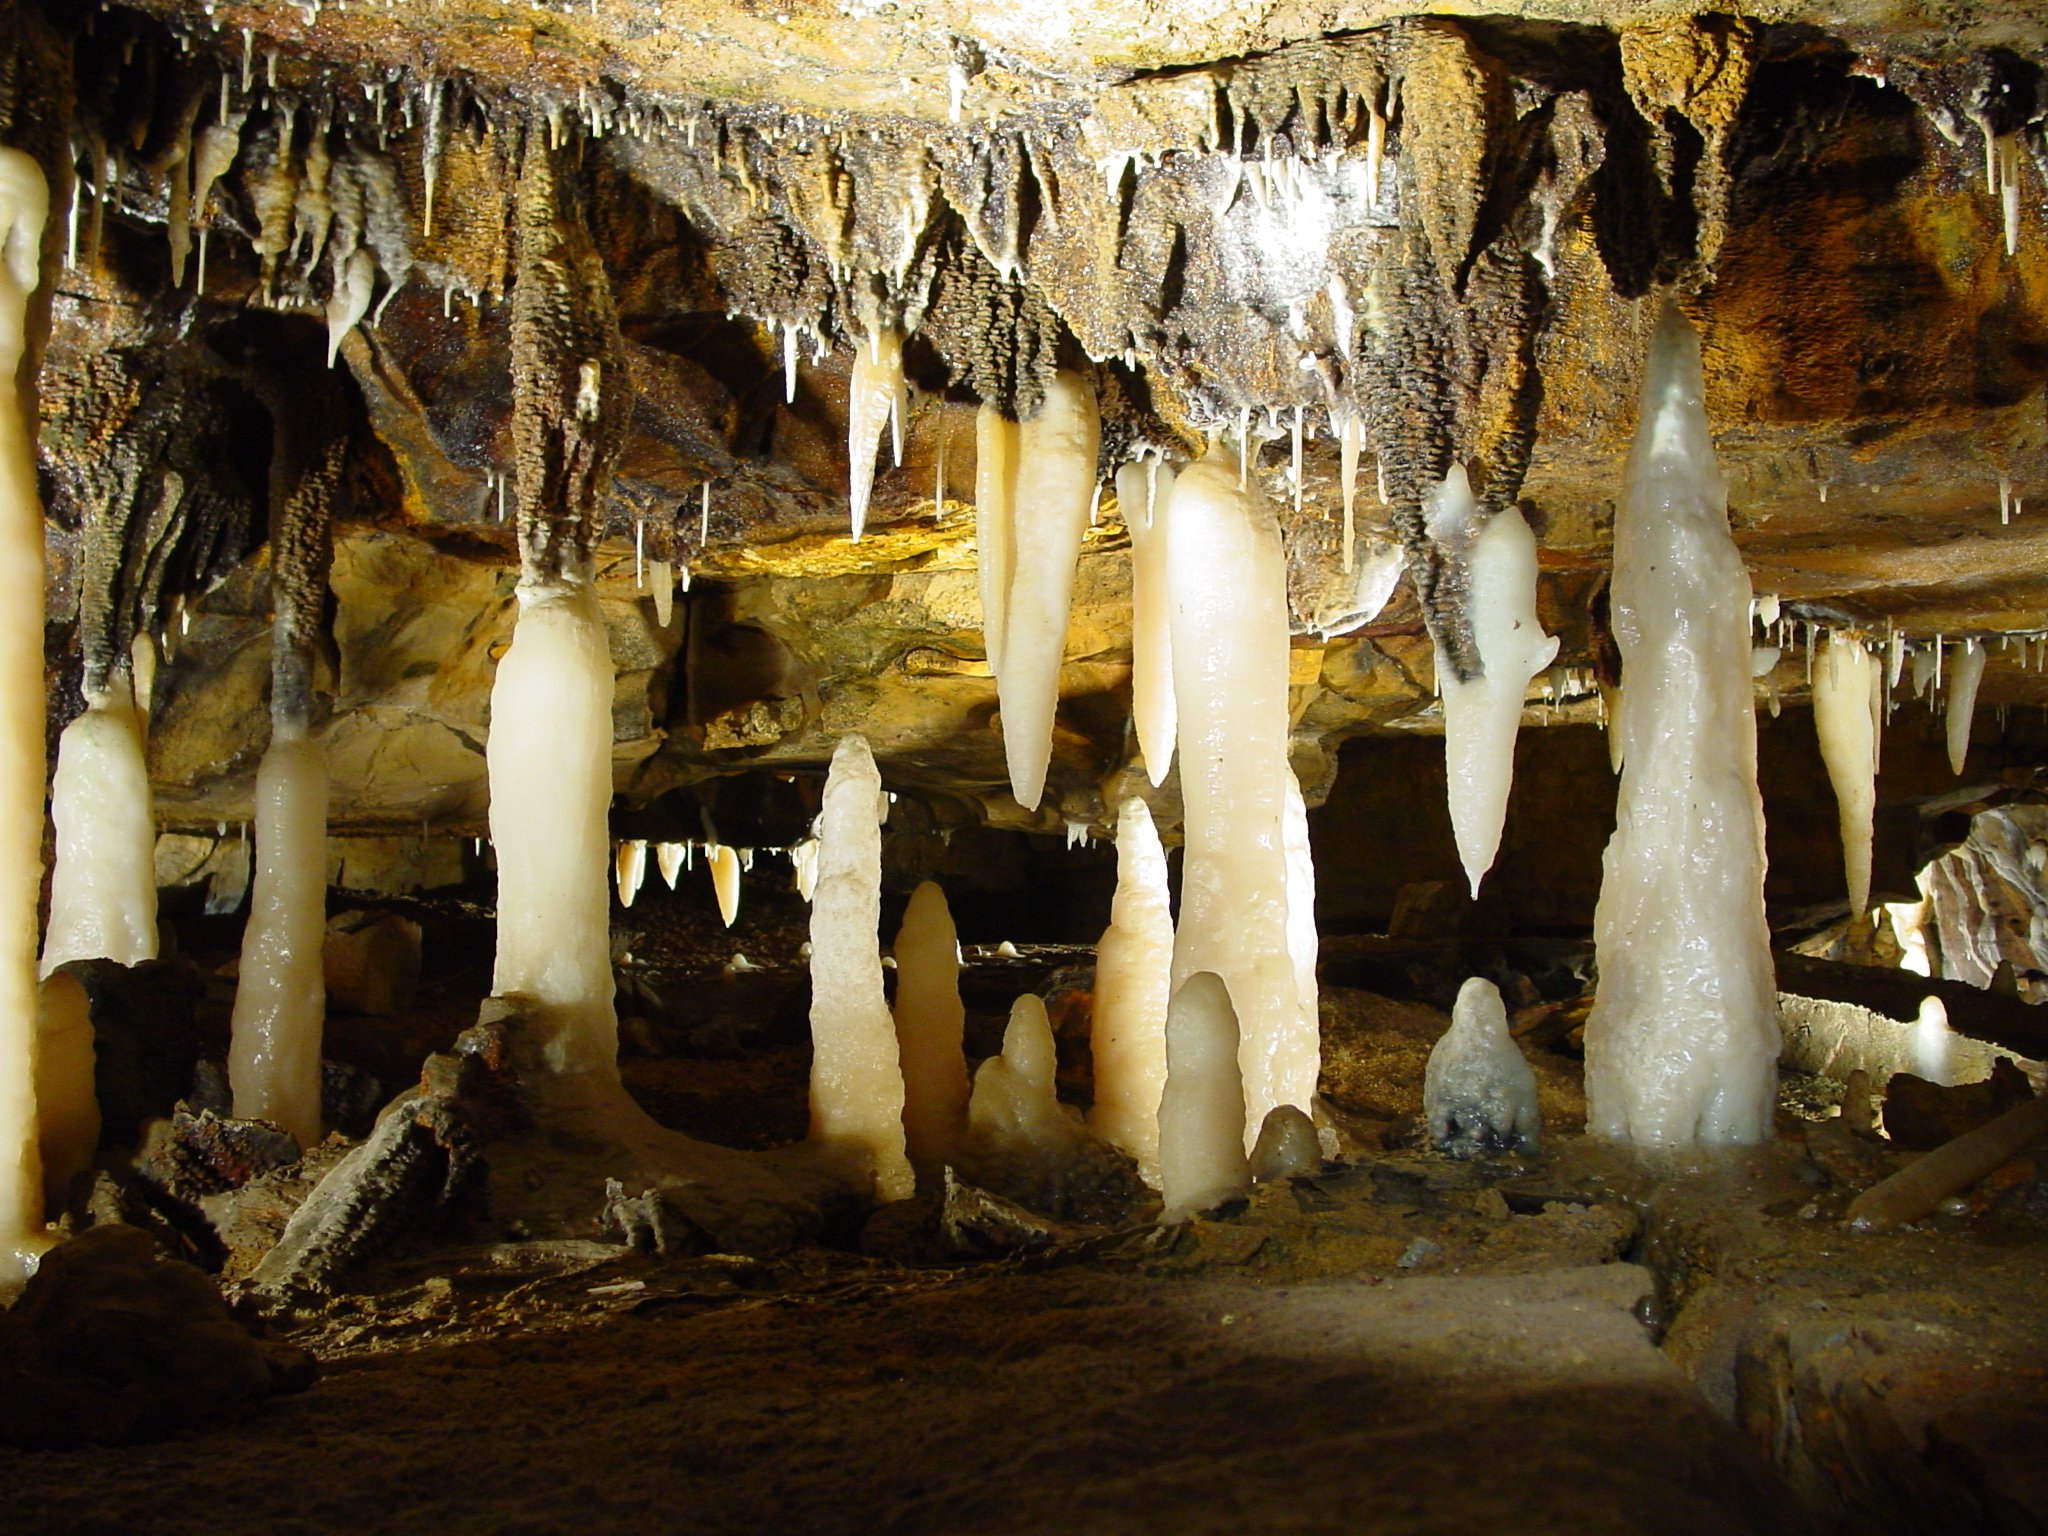 A Family Trip to Ohio Caverns